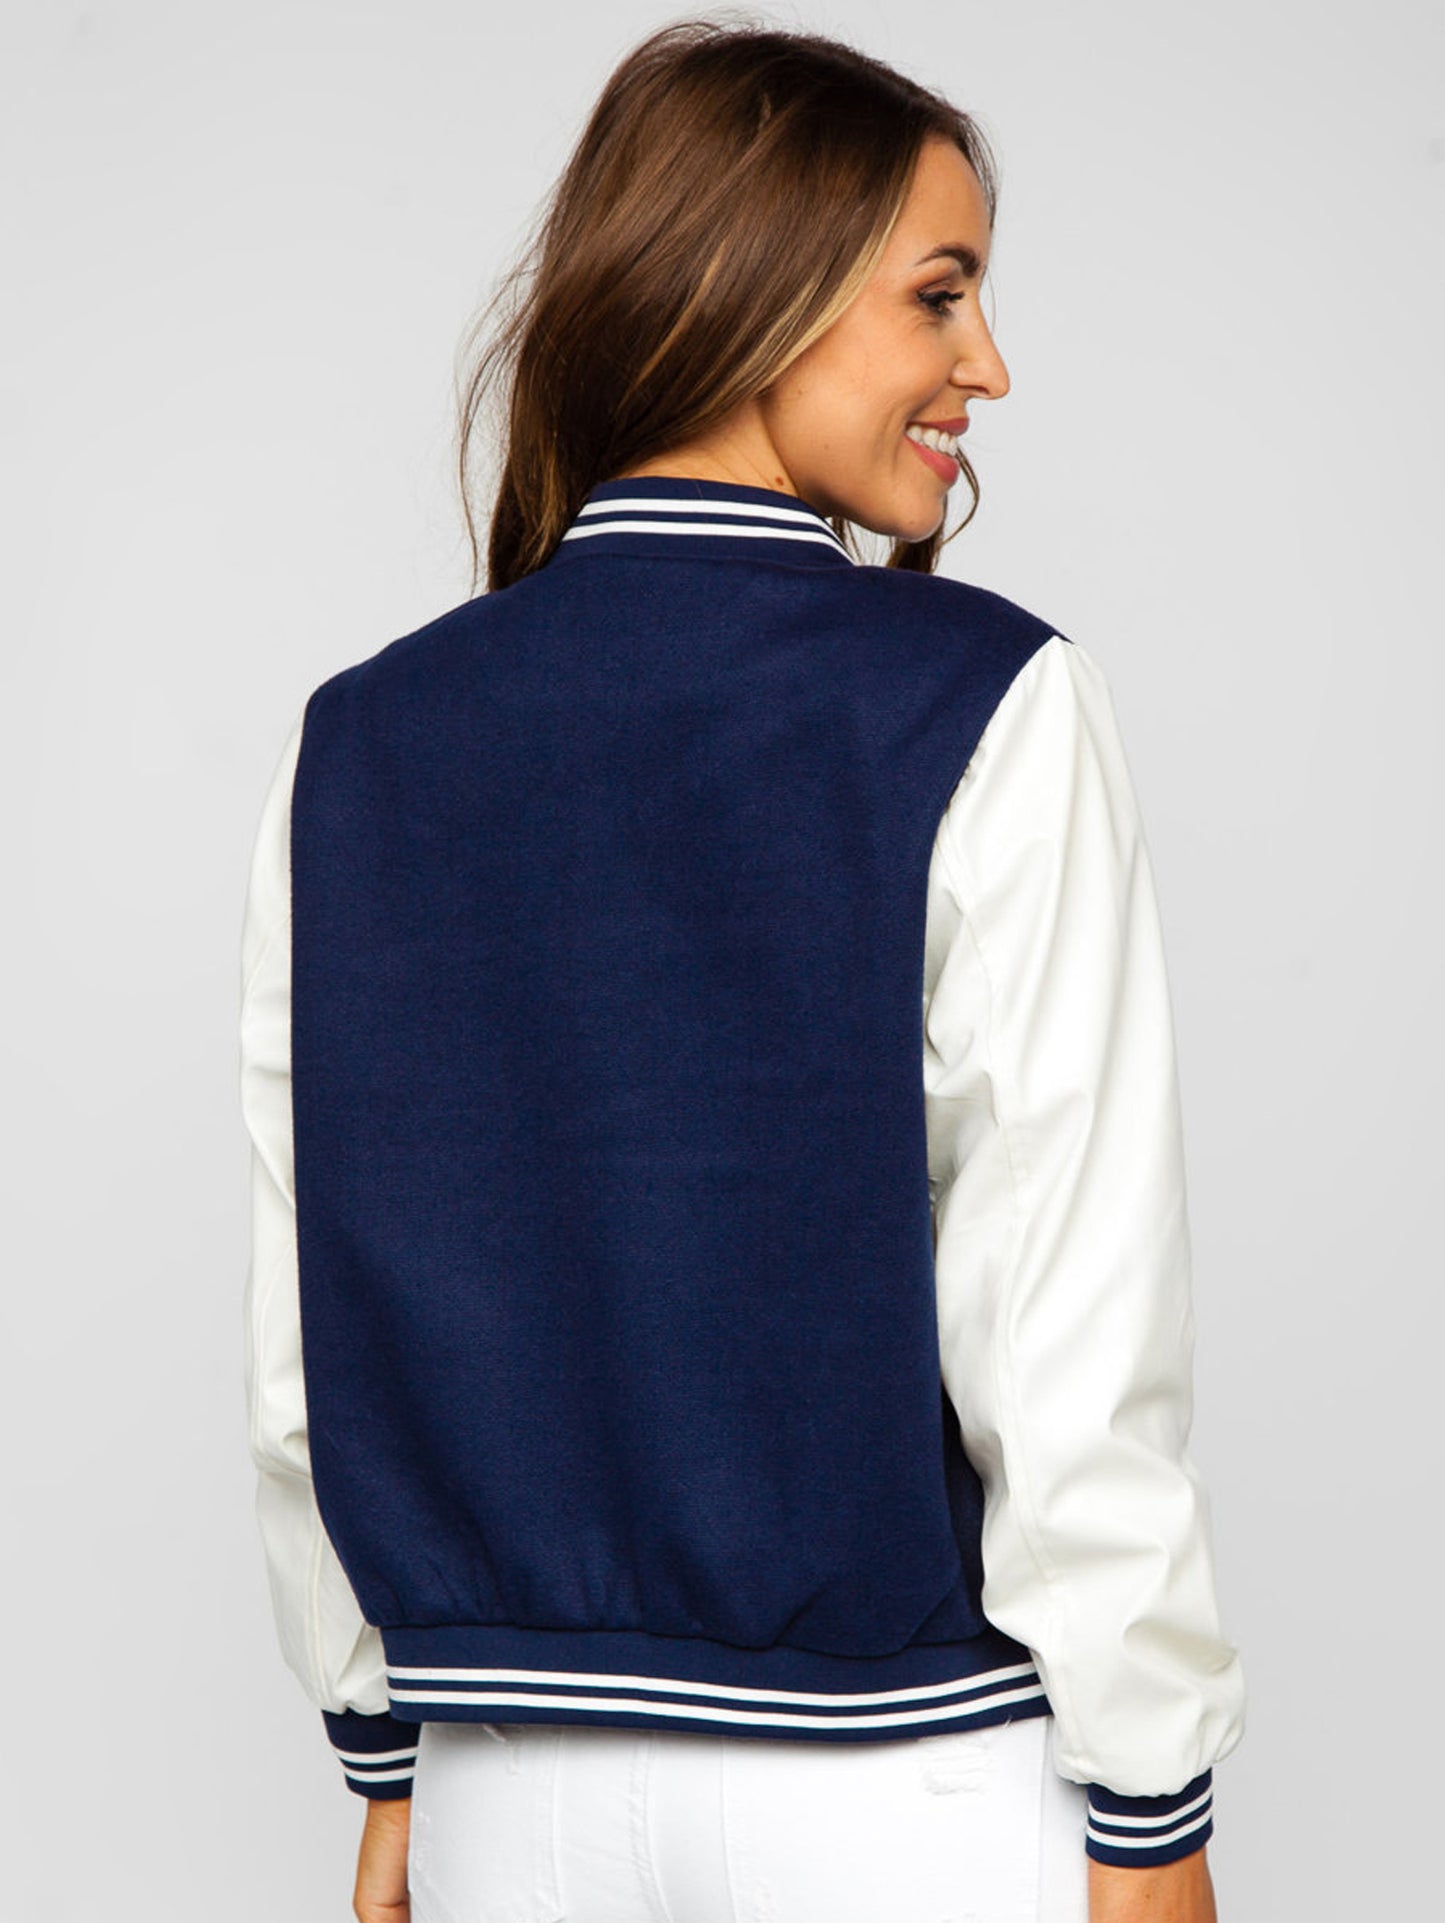 Women's Navy Blue Baseball Jacket